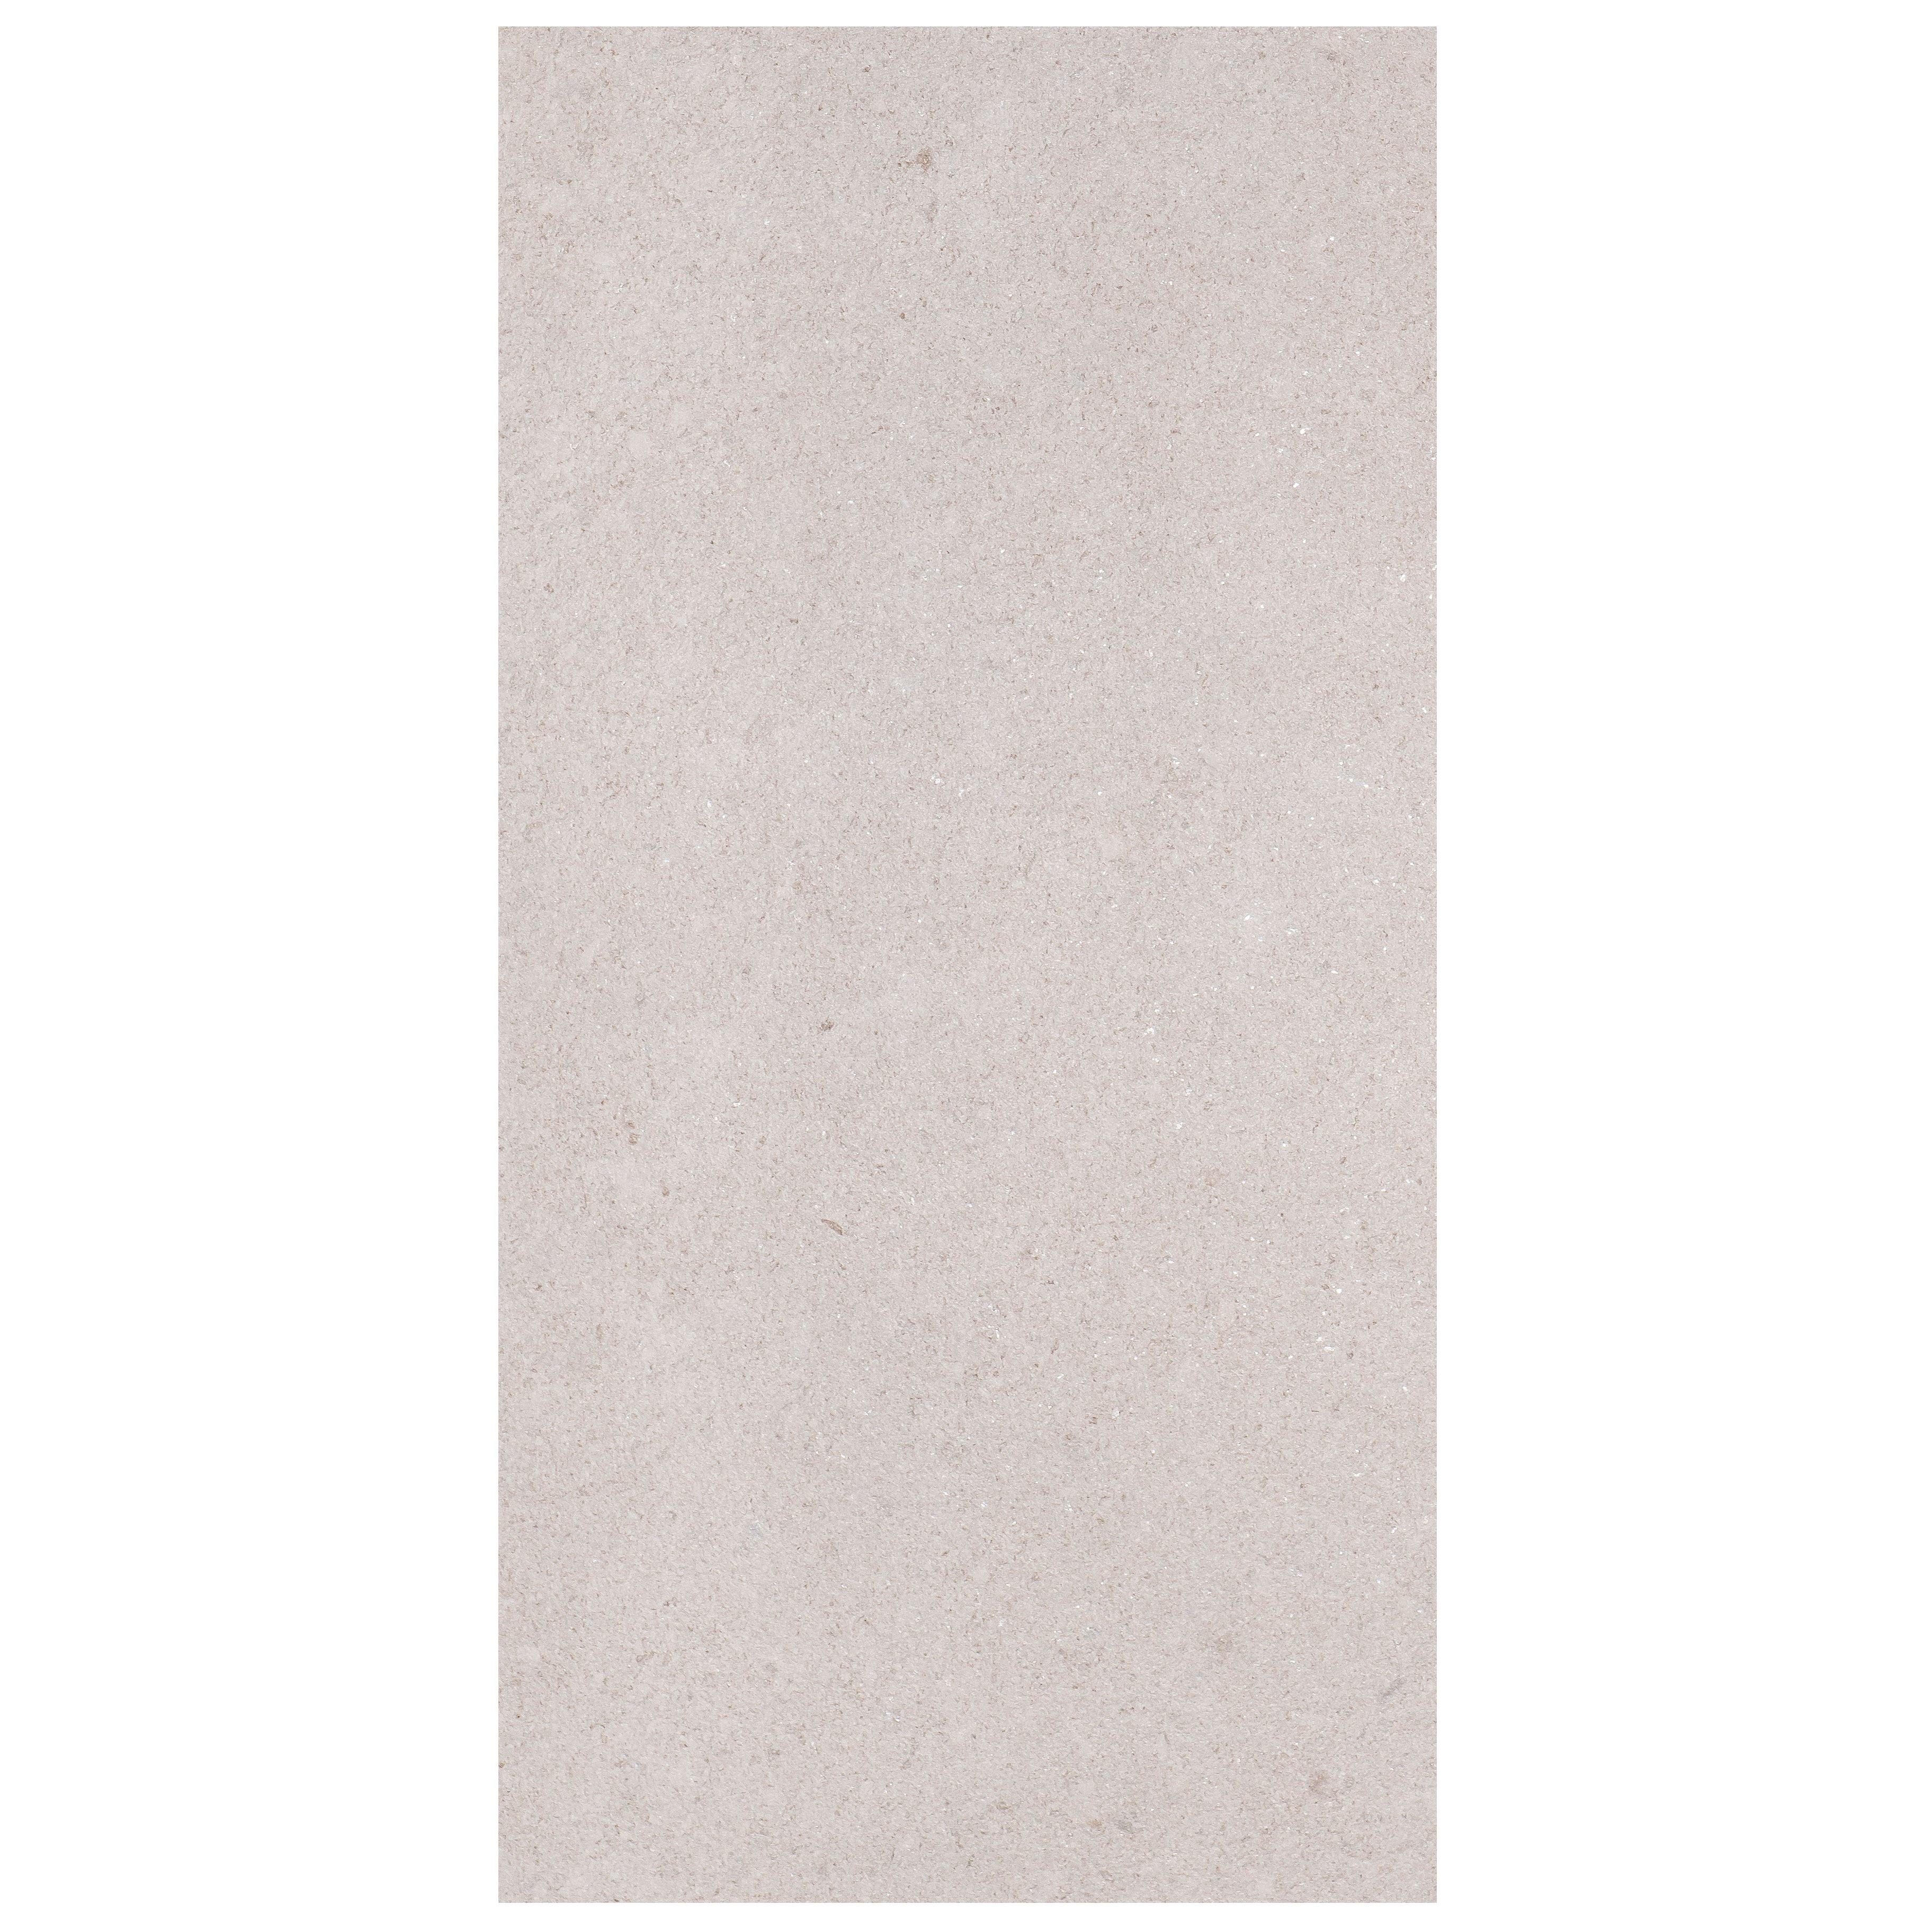 Klinker Bricmate J36 Stone Light Grey 30×60 cm